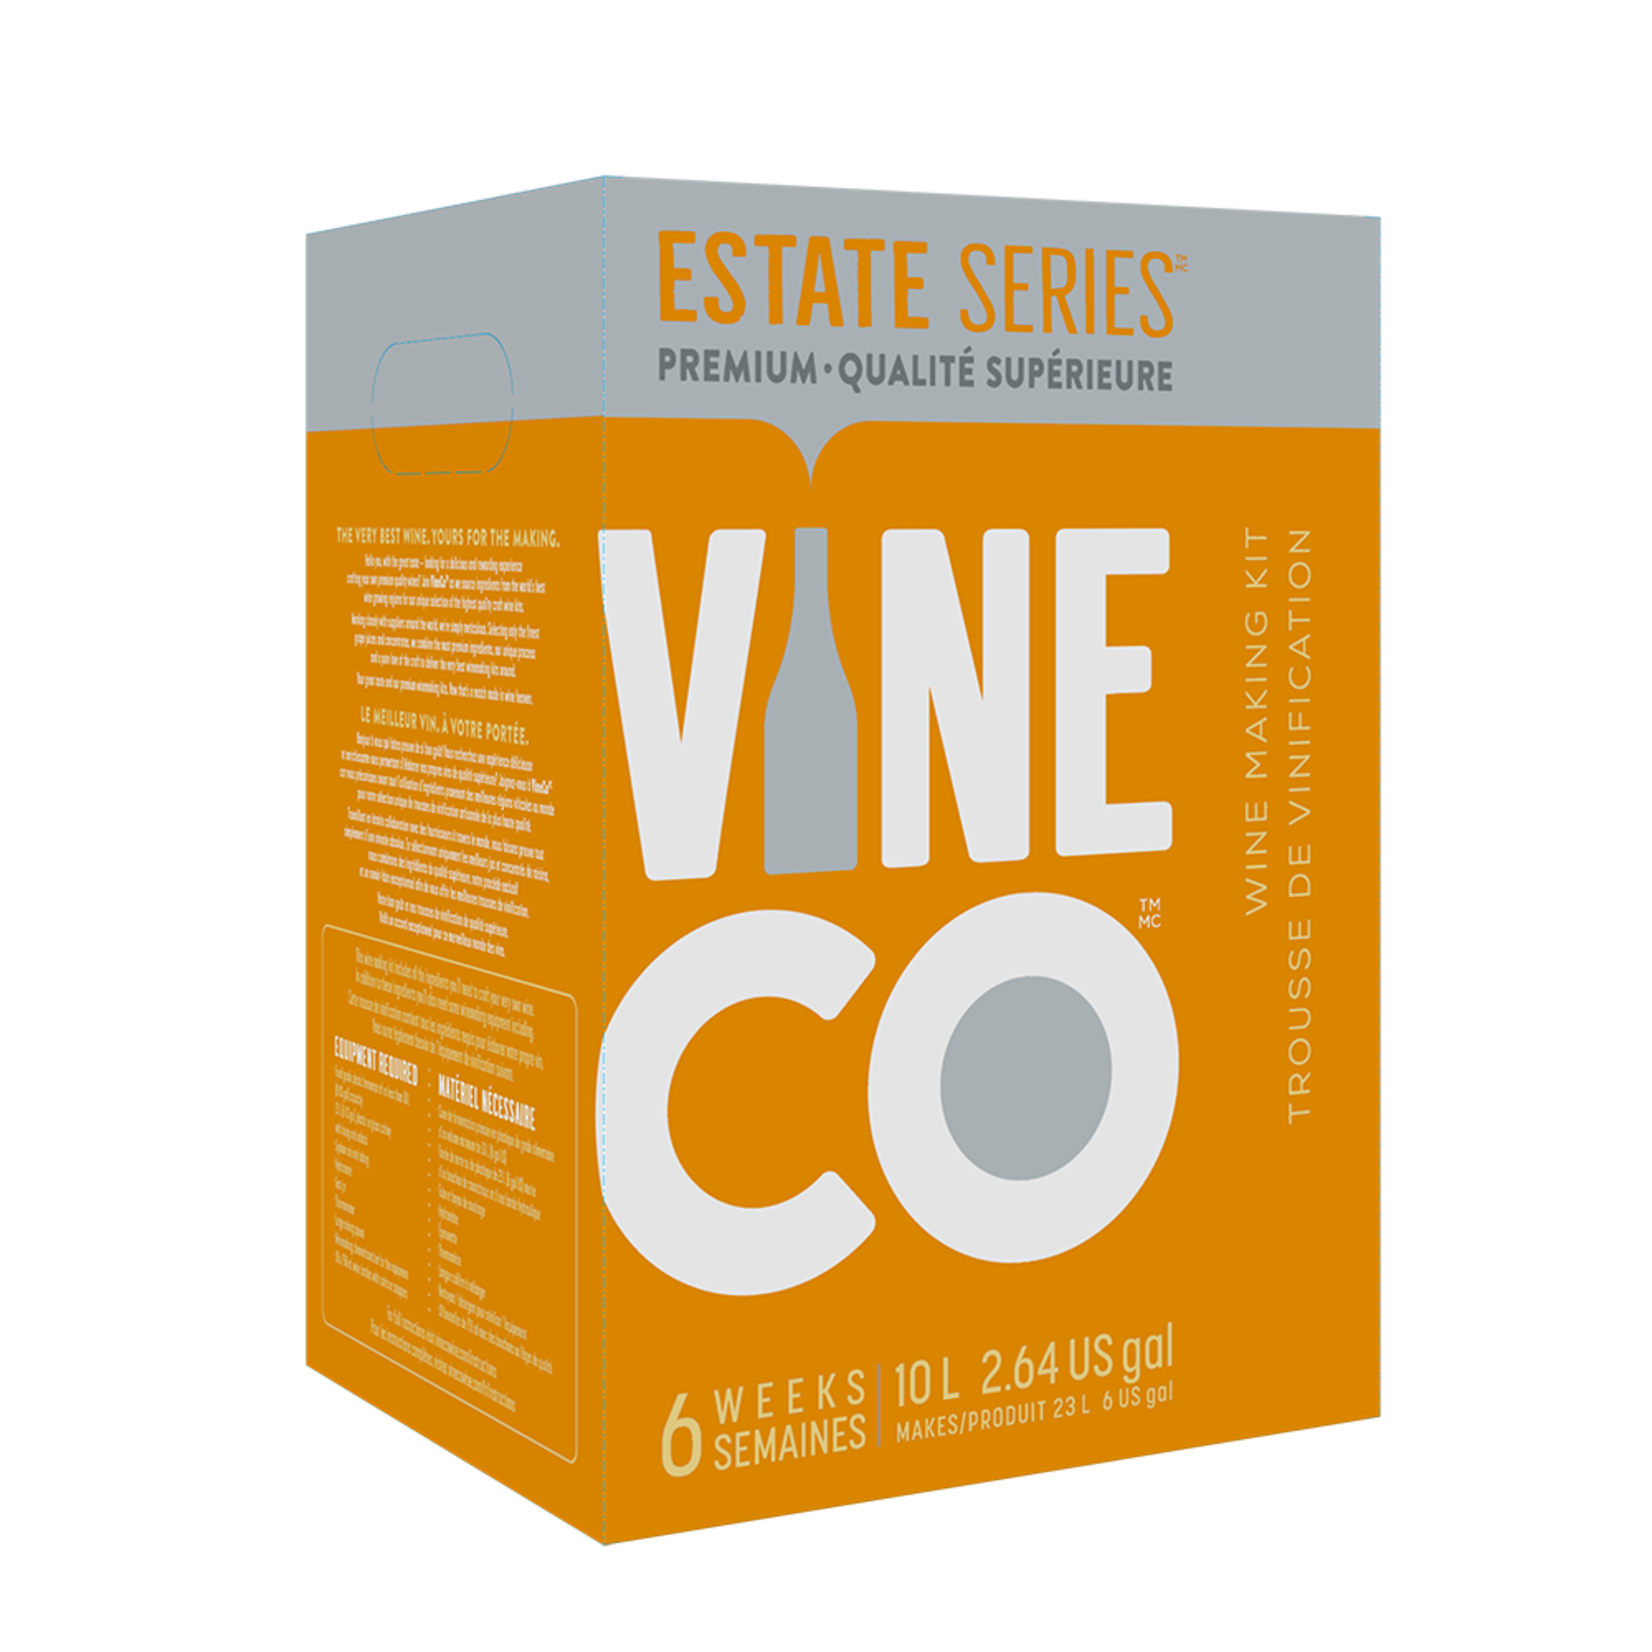 Vine Co. Estate Series Cabernet Sauvignon (Wine Kit), AUS